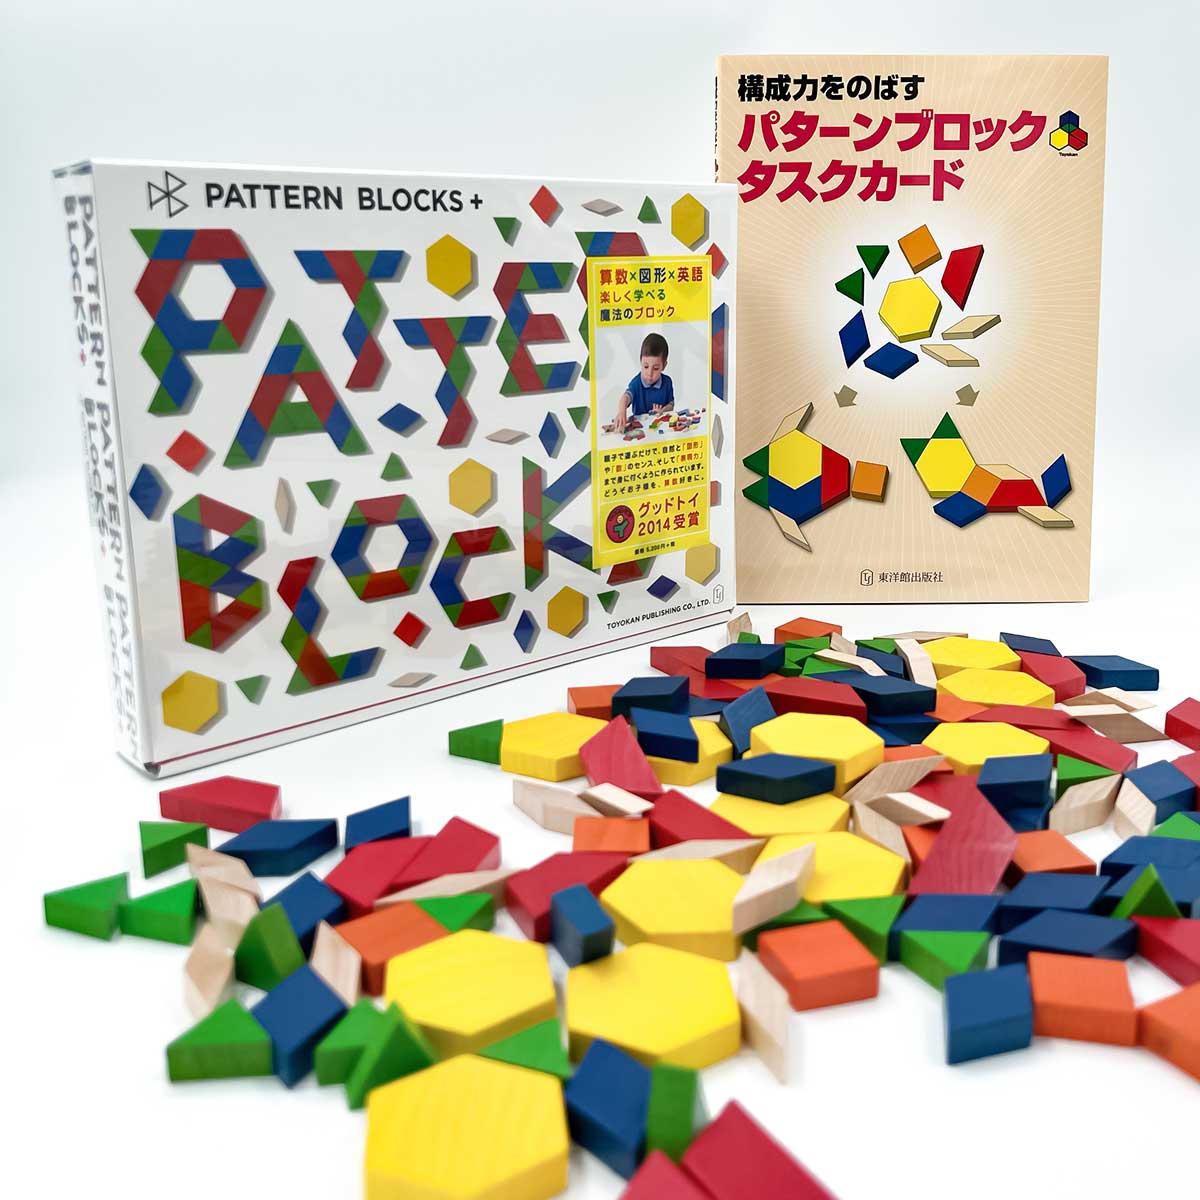 ★web限定セット★PATTERN BLOCKS＋基本セット - 東洋館出版社